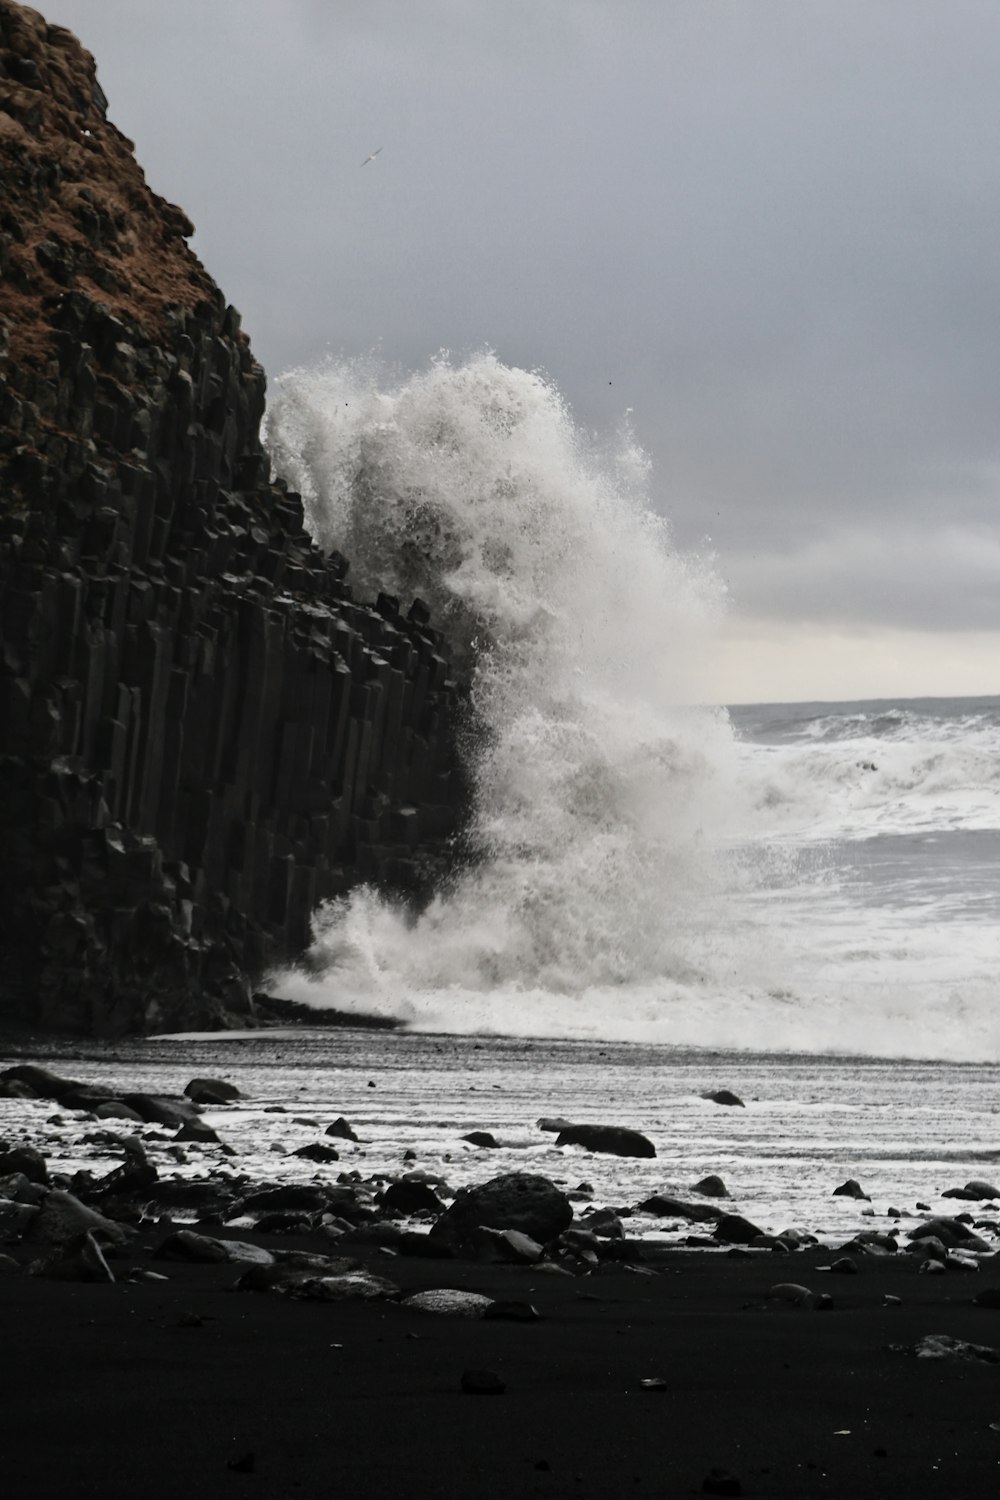 a large wave crashing into a rocky beach